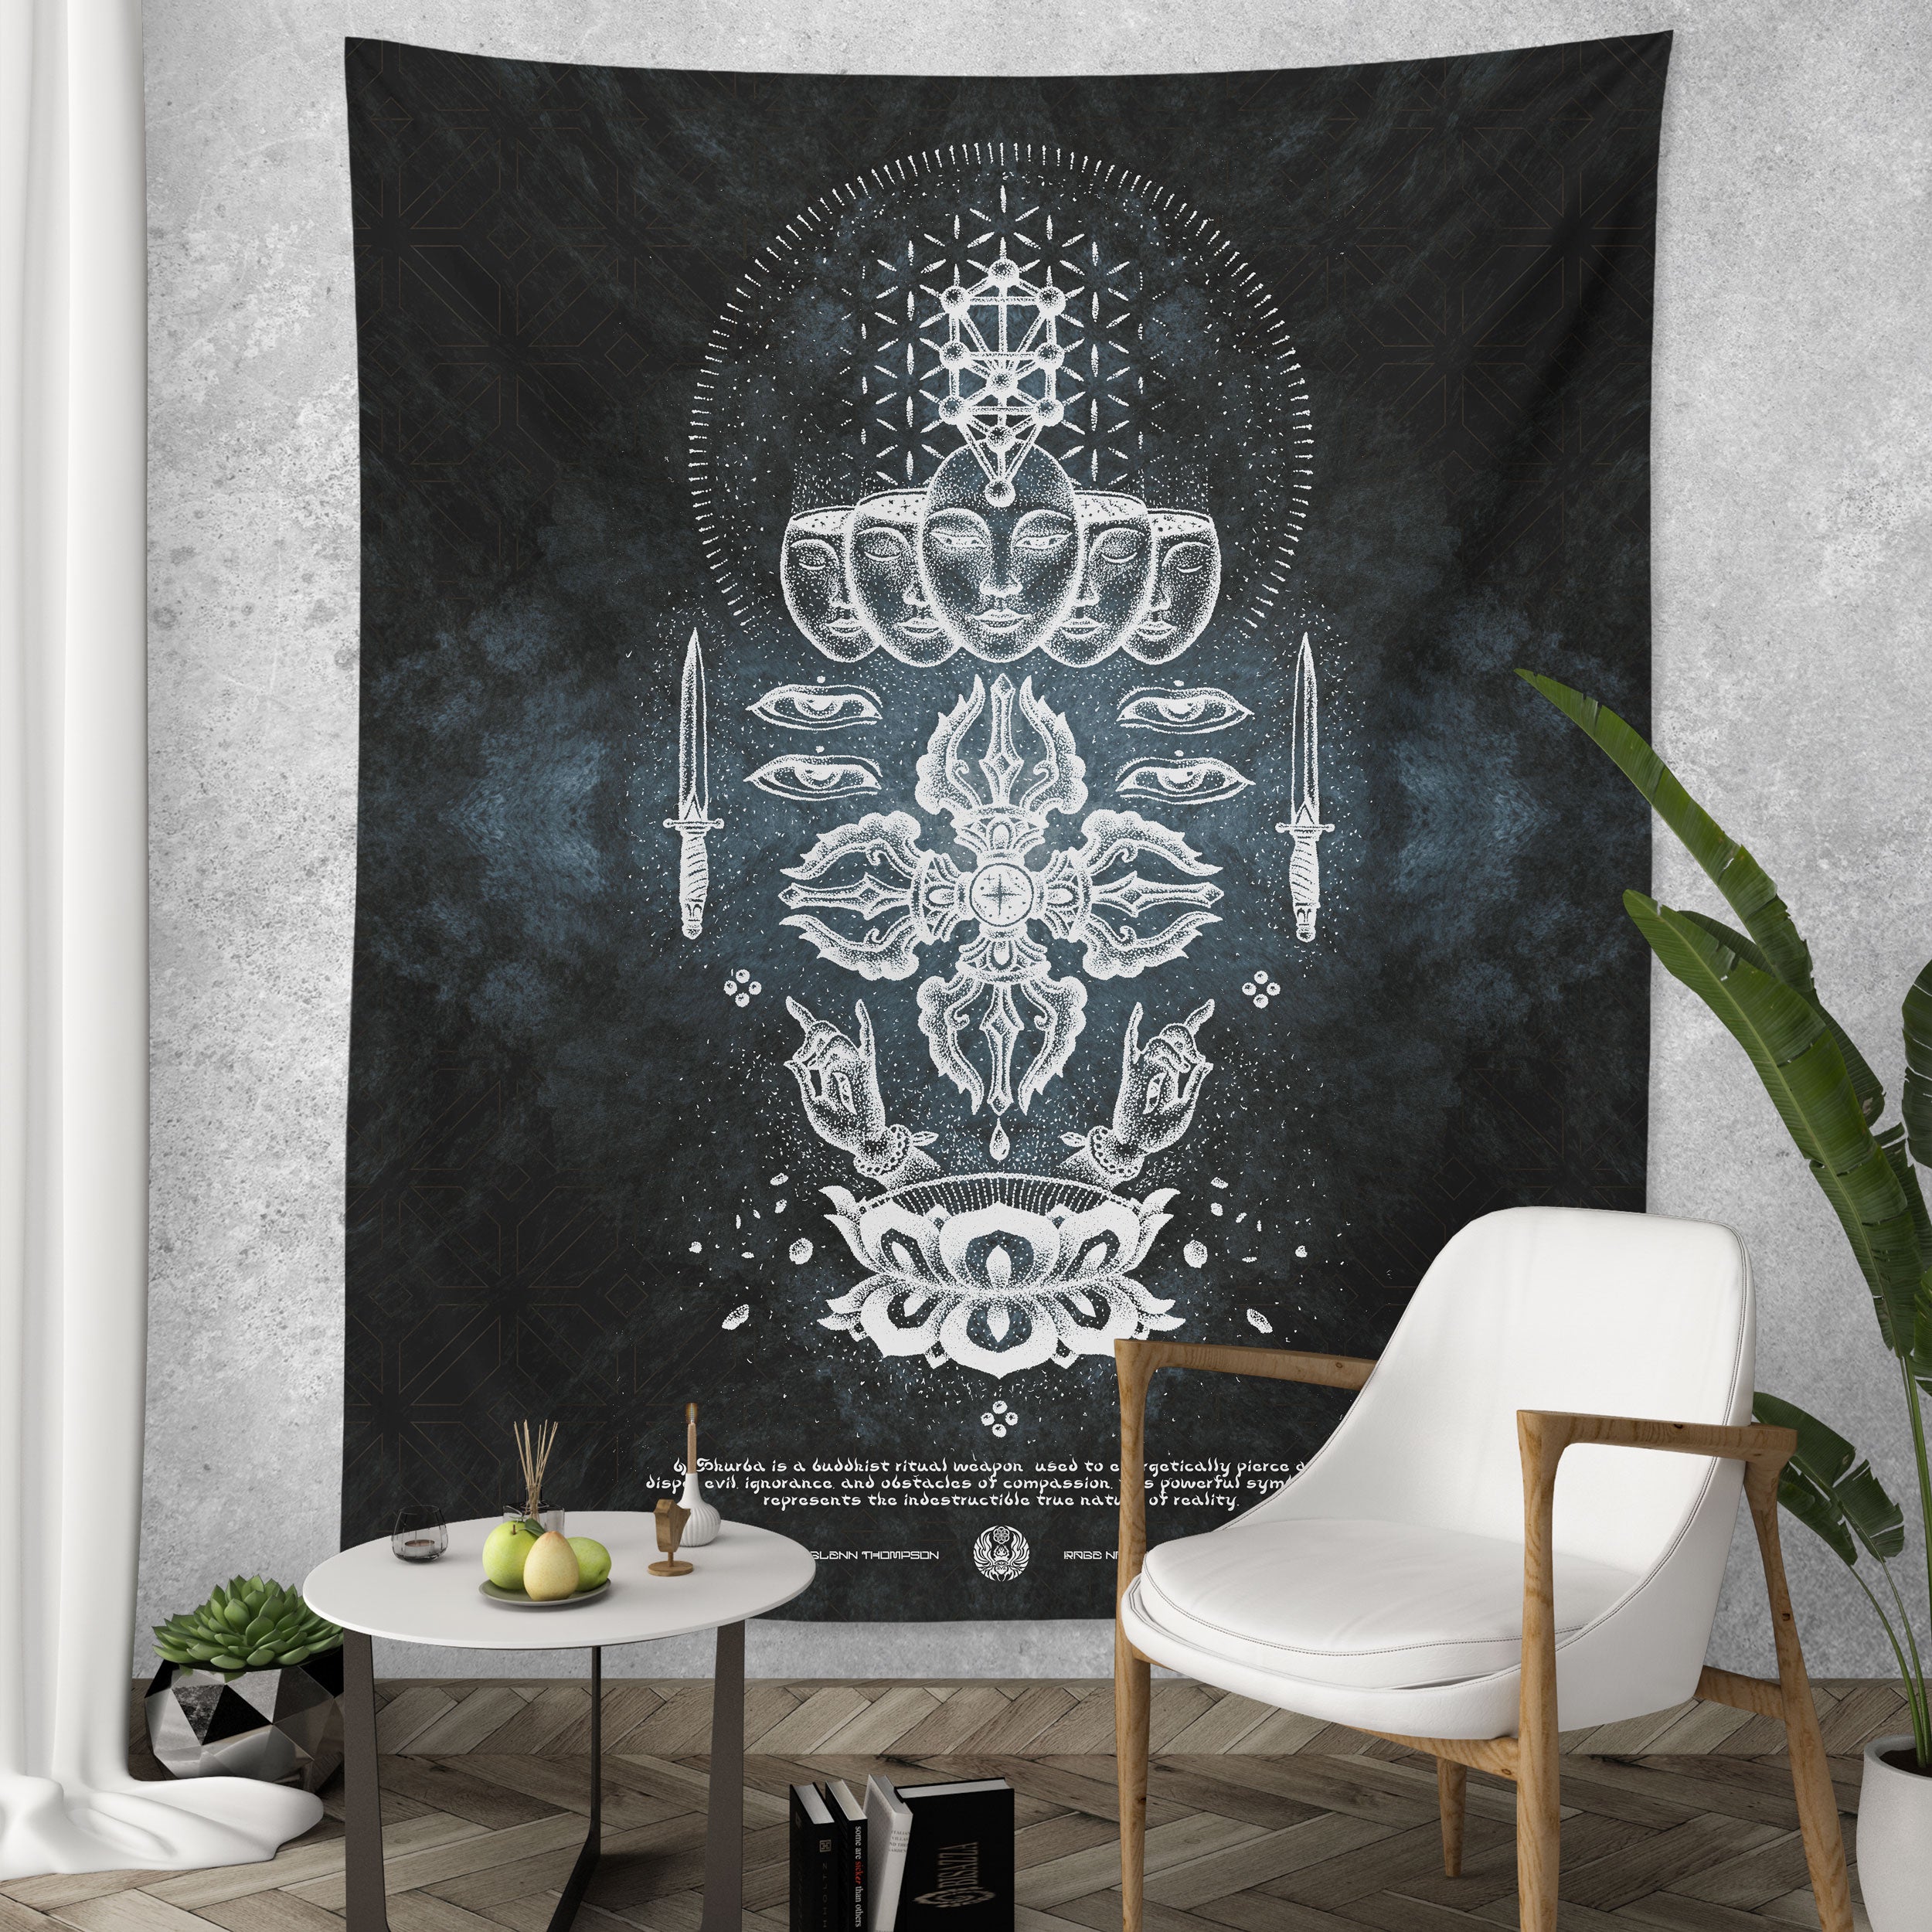 DIAMOND LUMINOSITY • GLENN THOMSON • Limited Edition Tapestry Tapestry 